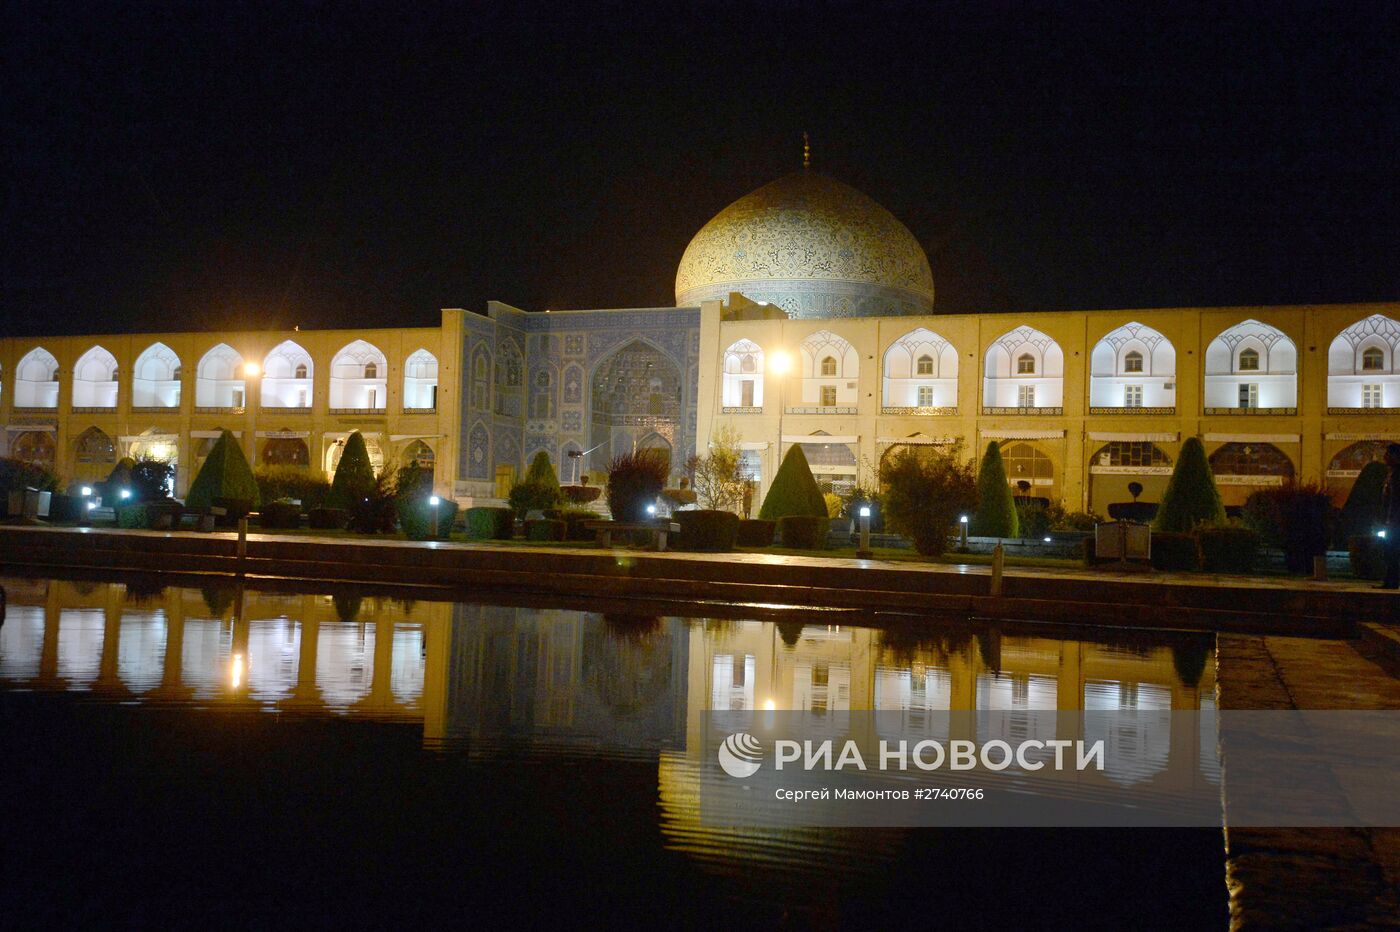 Мечеть Имама в городе Исфахан в Иране